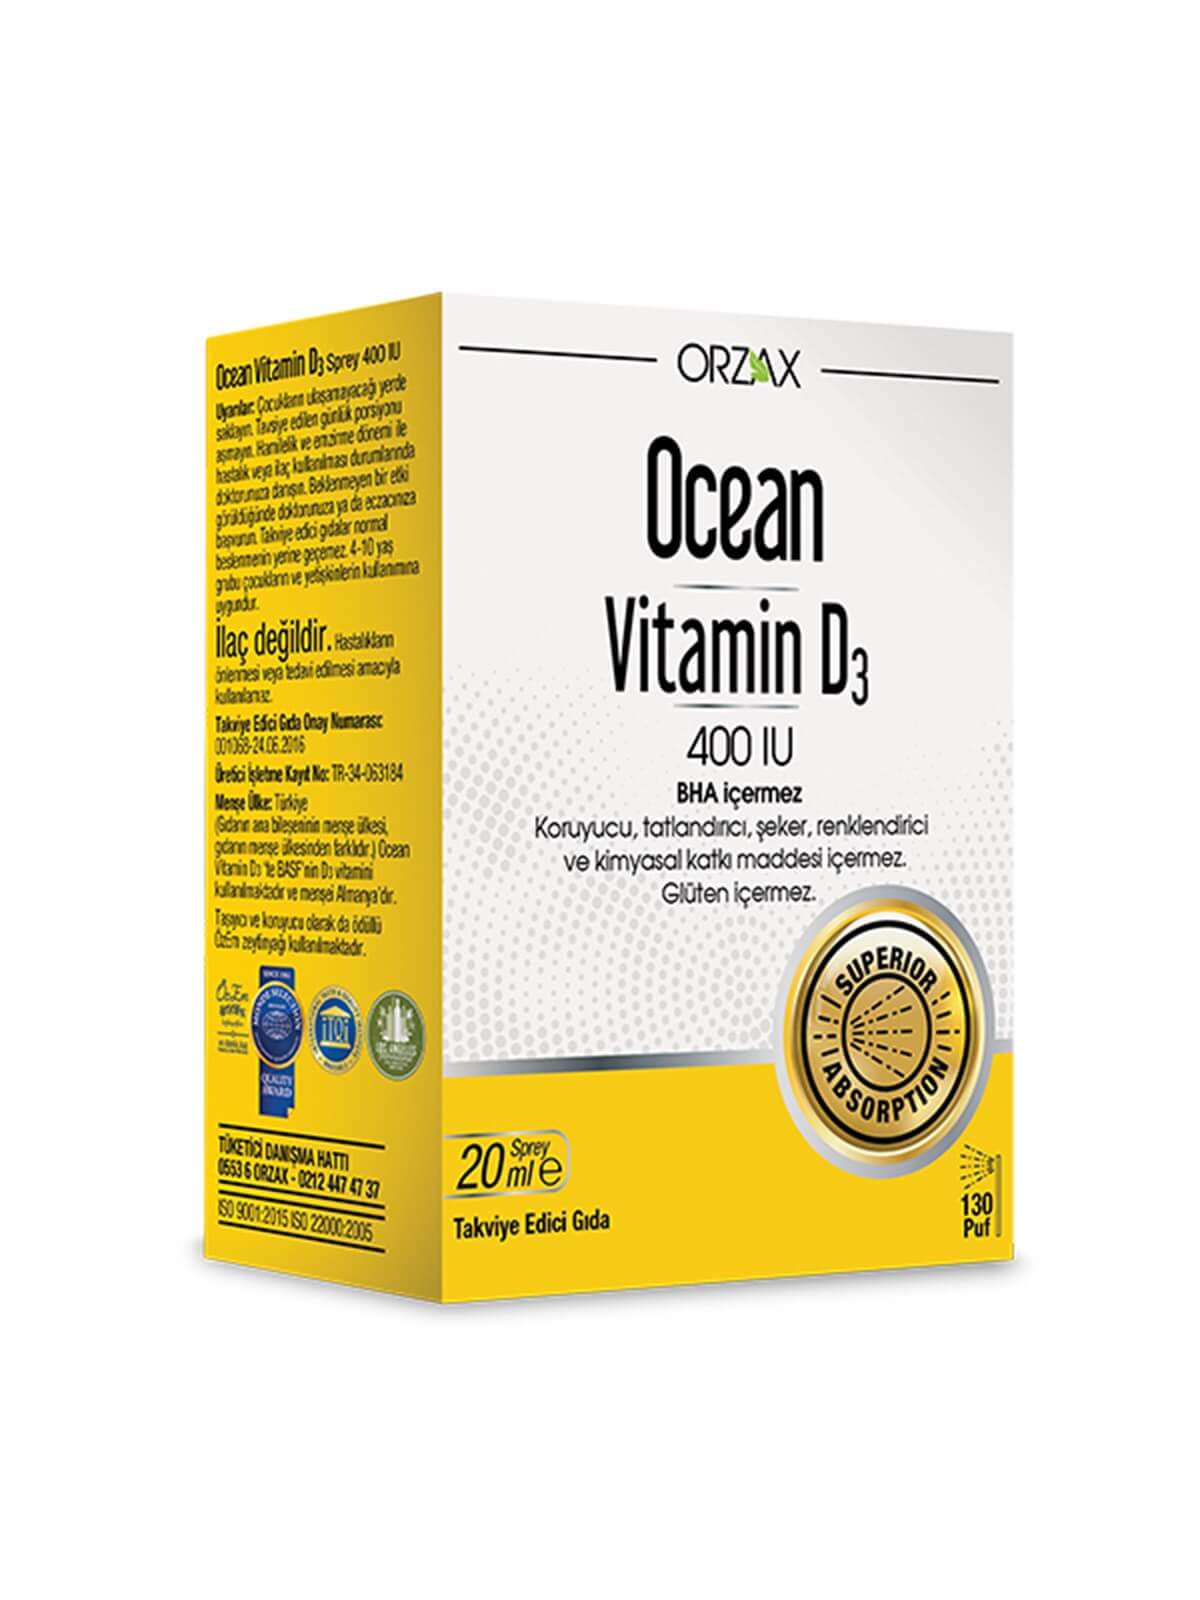 Ocean Vitamin D3 1000 UI Sprey Orzax